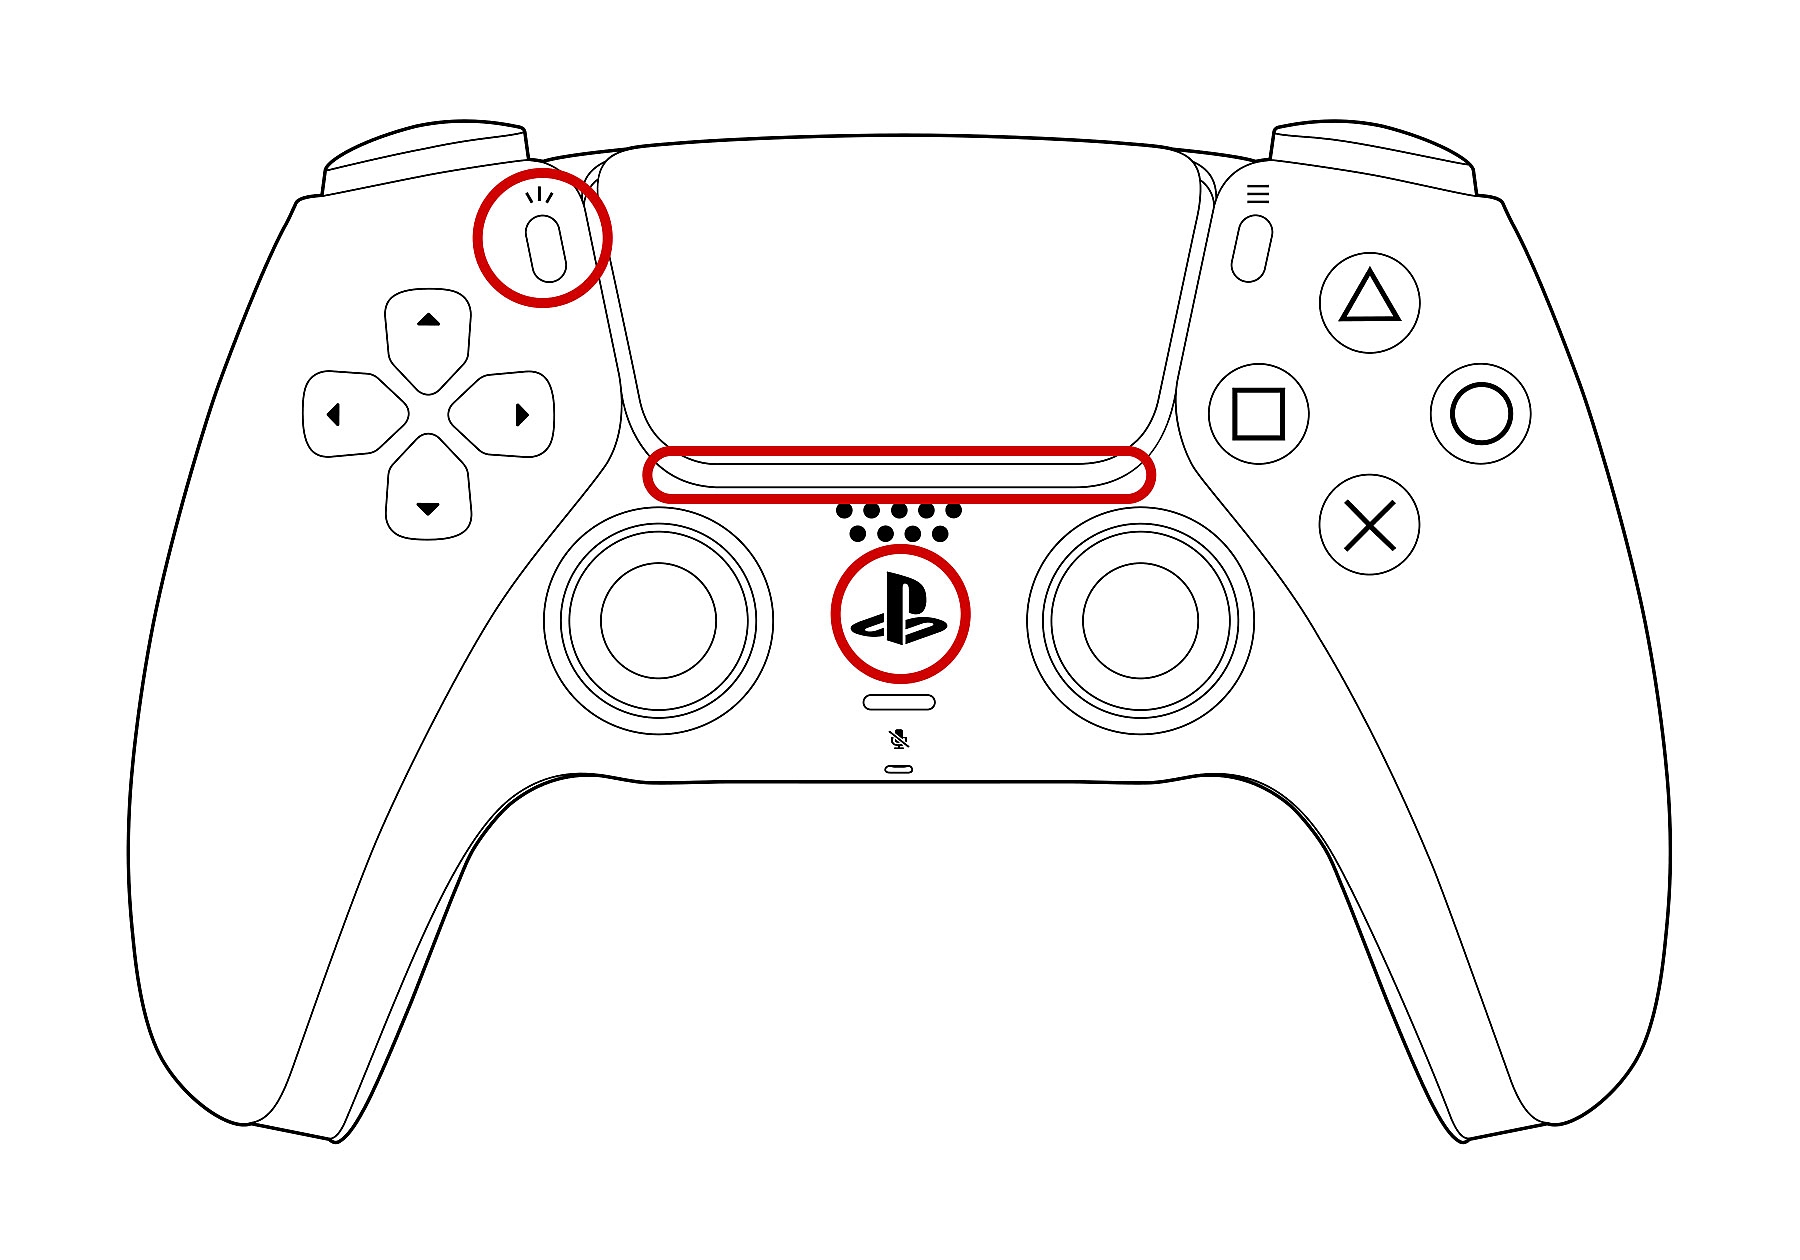 DualSense 무선 컨트롤러의 앞면으로, 표시등, PS 버튼 및 만들기 버튼에 동그라미 표시가 되어있습니다.